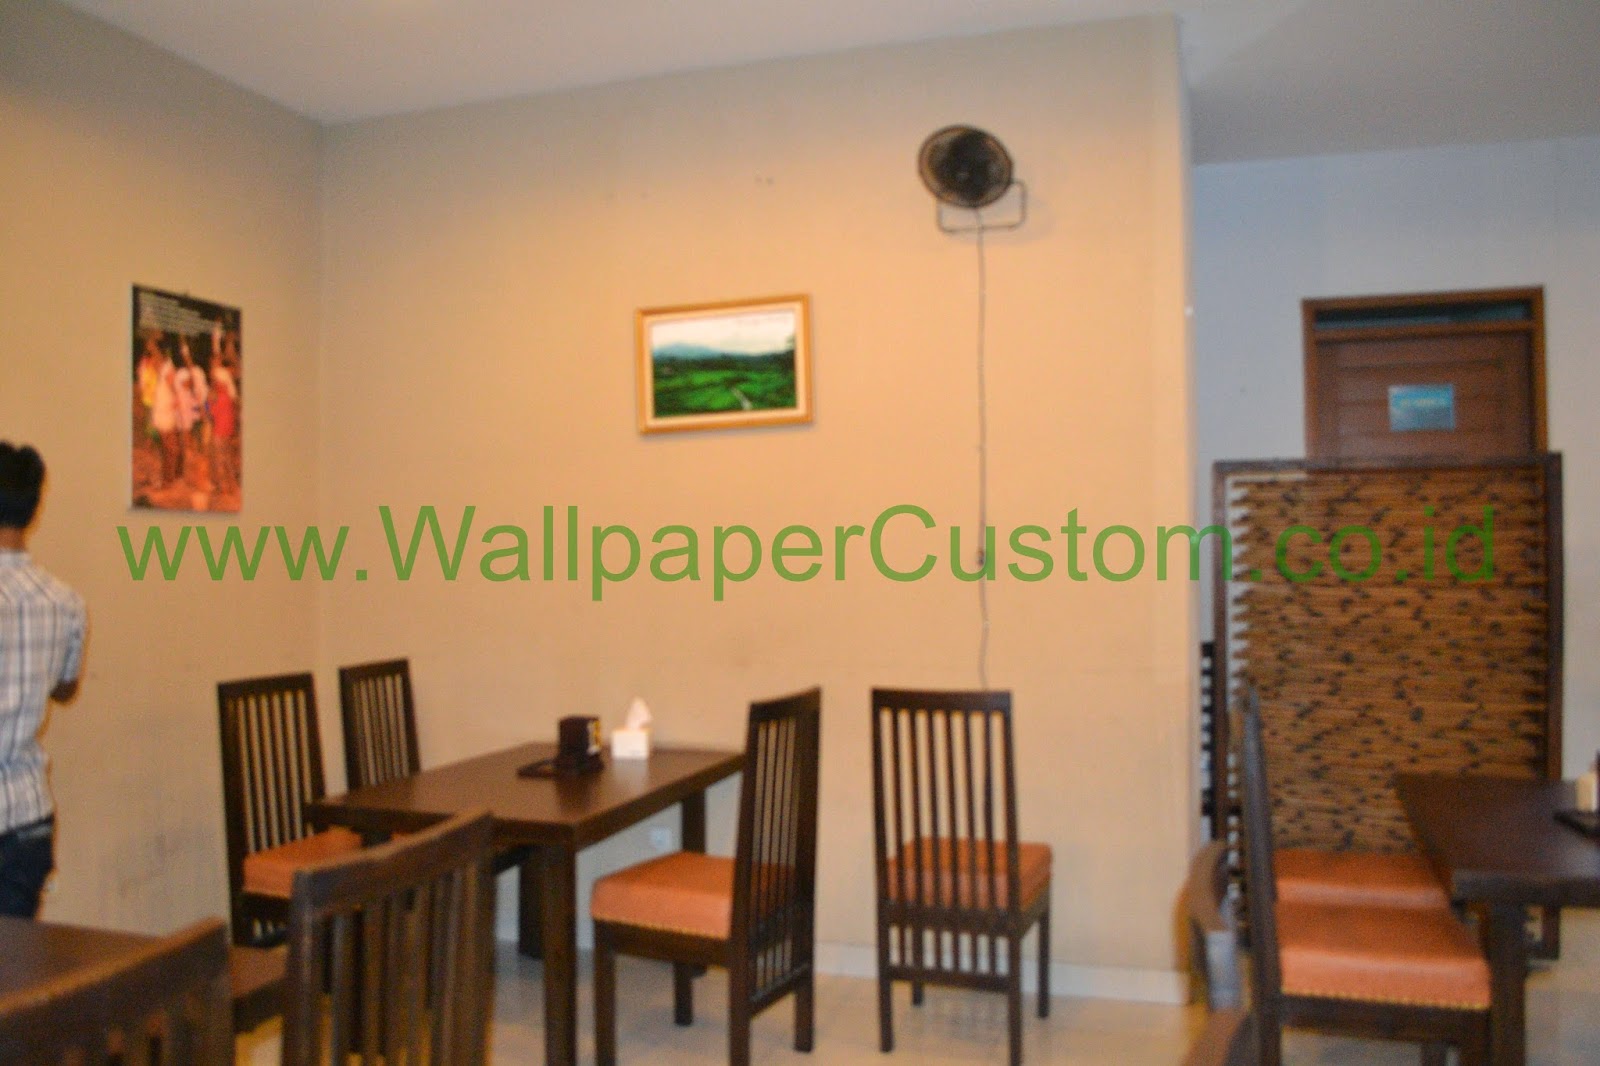 Jual Wallpaper Dinding 3d Jakarta Pusat Penjualan Wallpaper